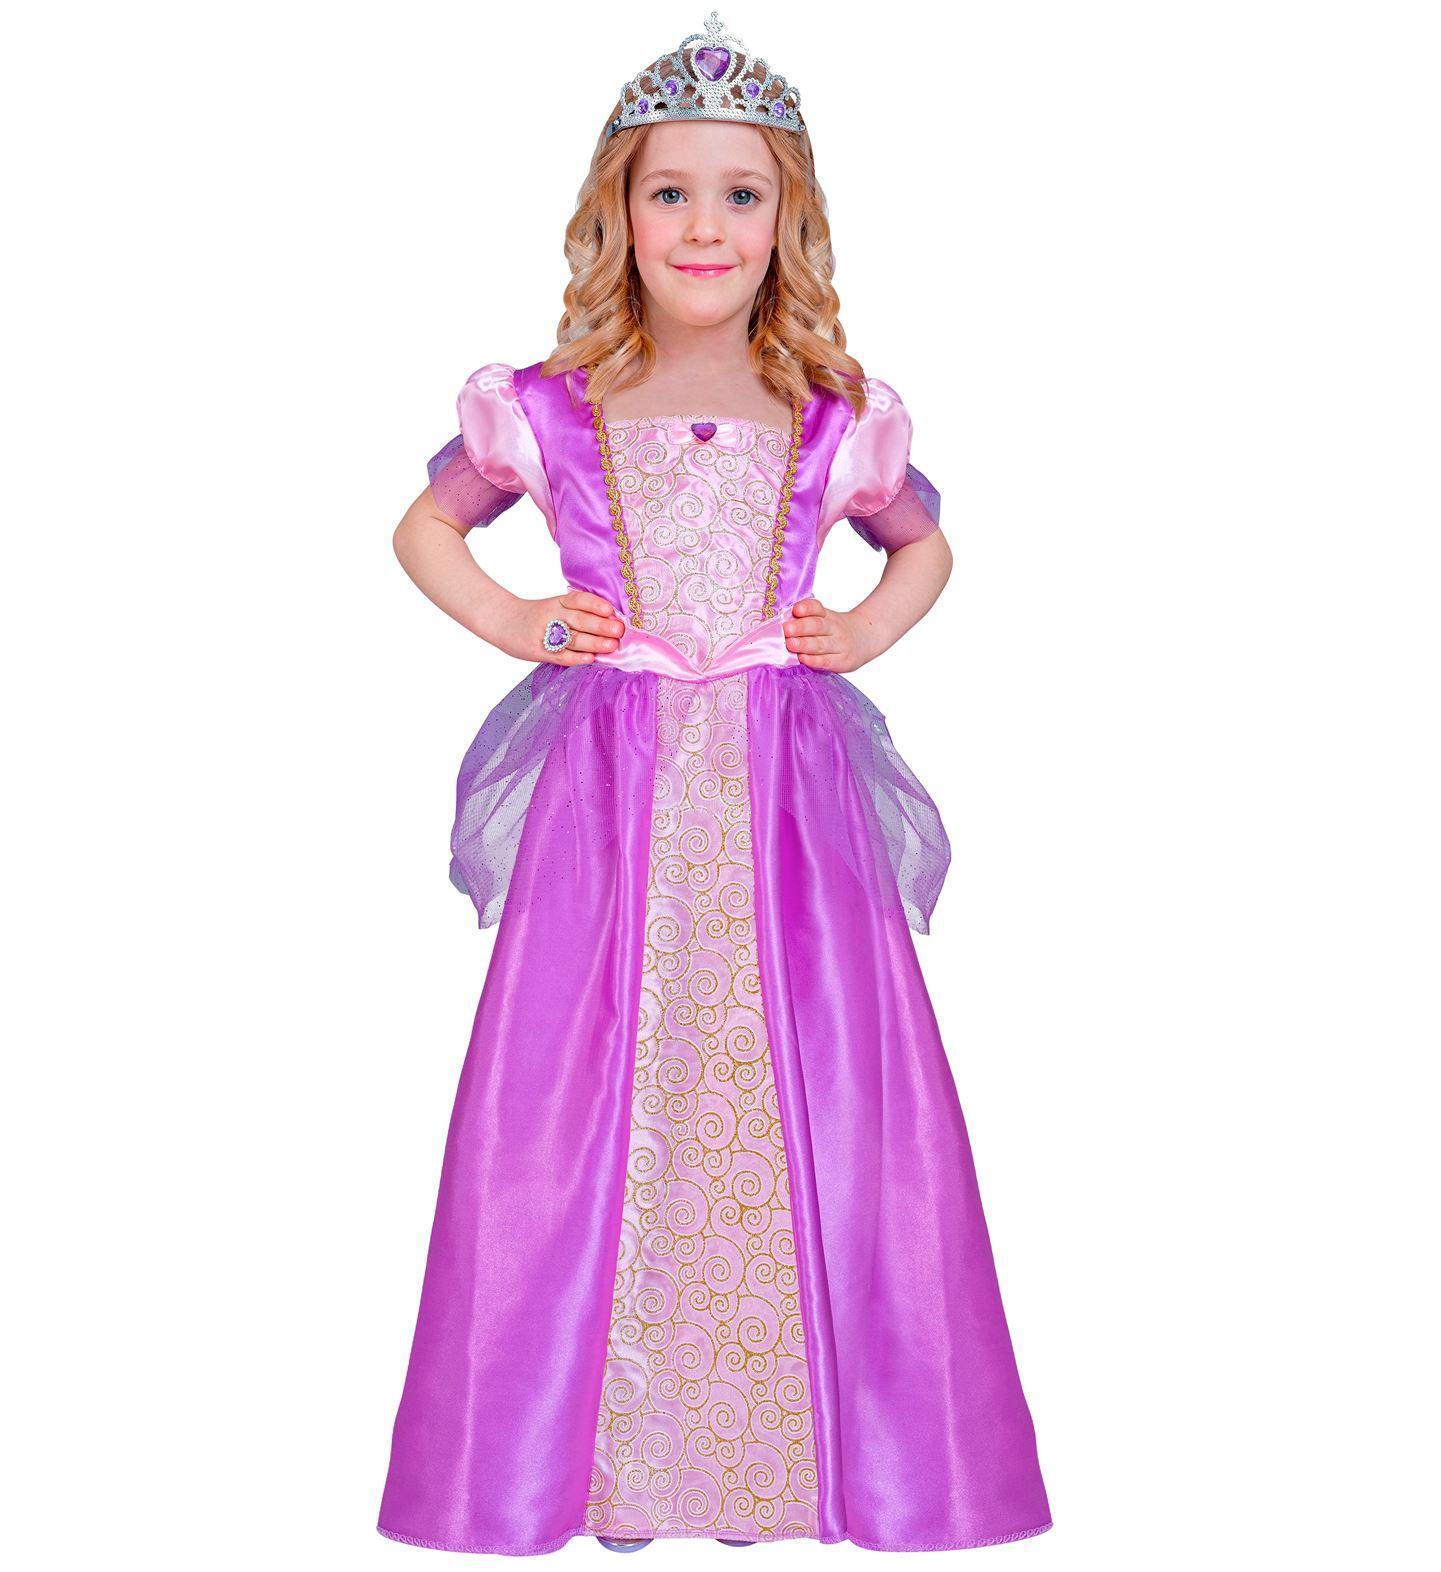 Betoverende kinder prinsessen jurk kleur paars voor een echte kleine prinses